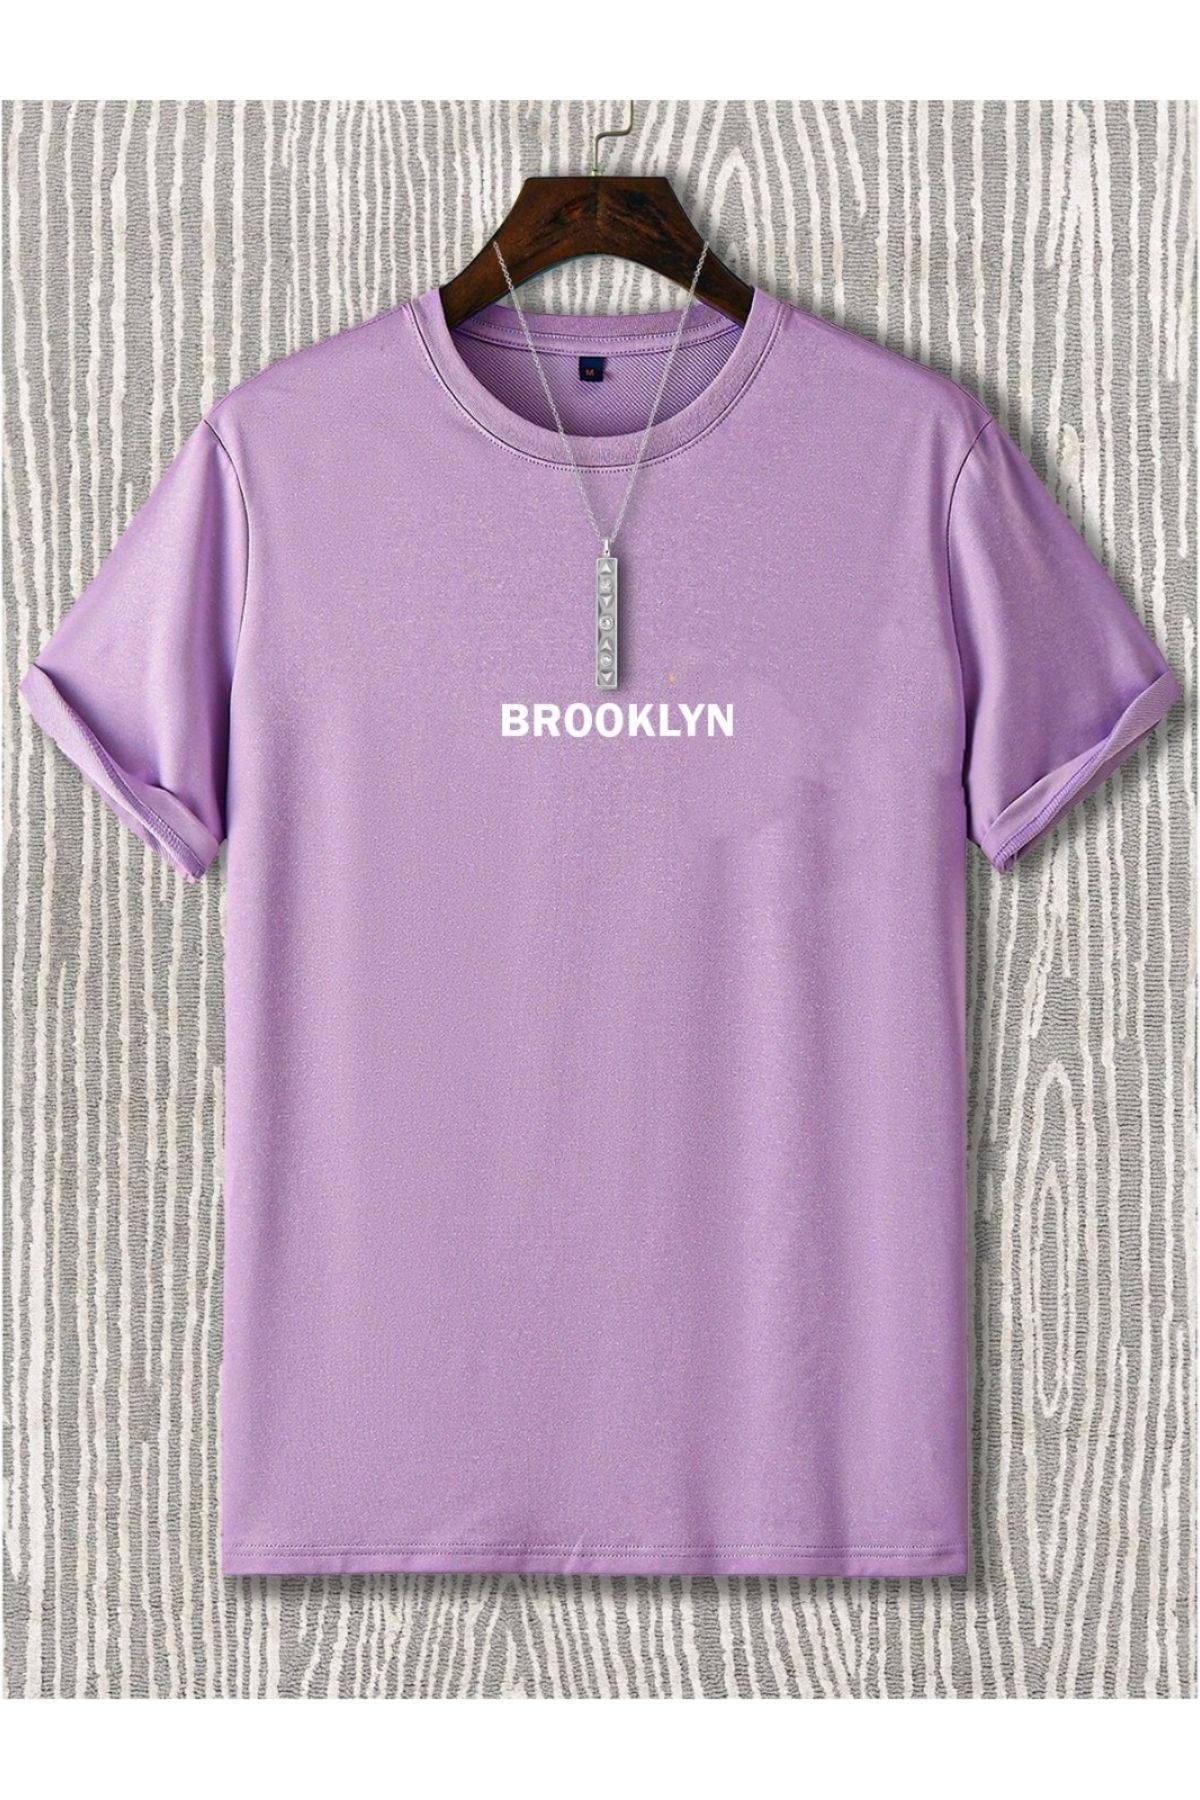 Black Sokak Men's Lilac Brooklyn Printed Oversize Crew Neck Short Sleeved Tshirt